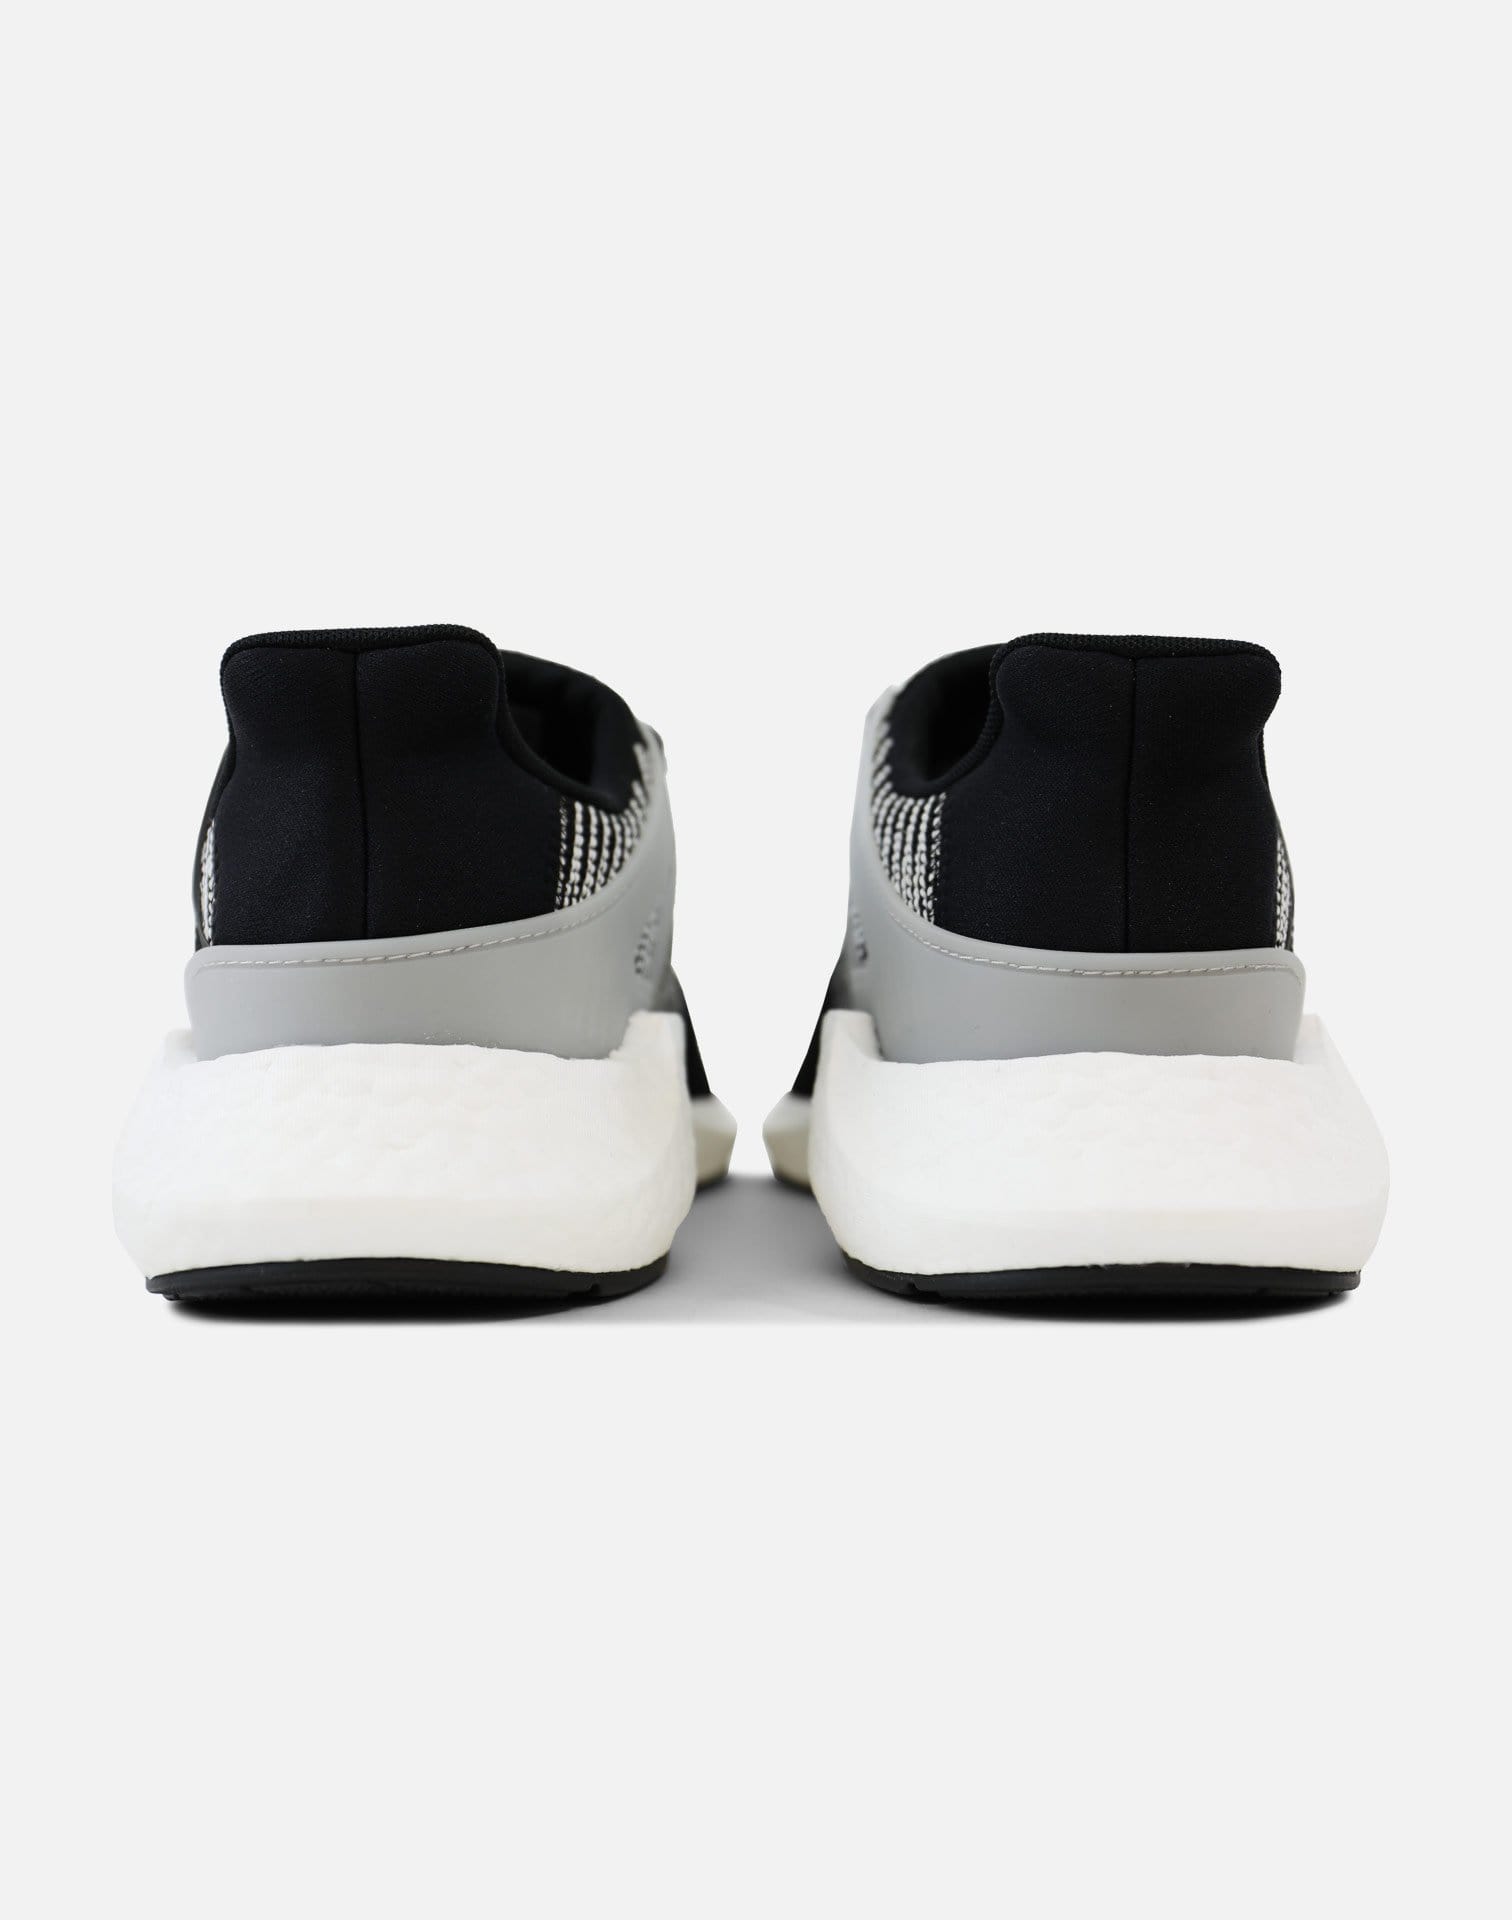 adidas EQT Support 93/17 (Core Black/Running White)